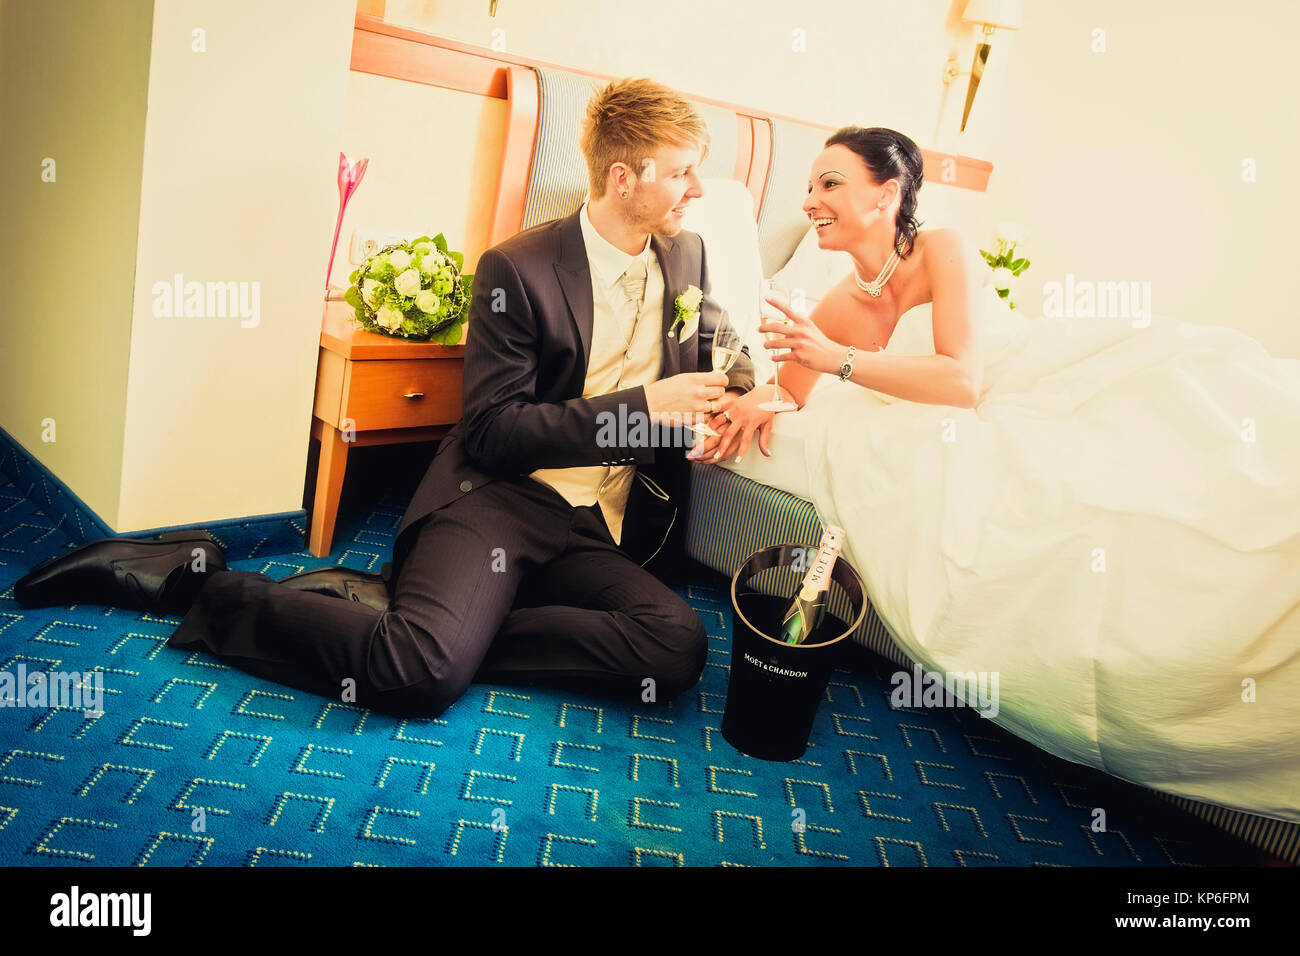 Brautpaar im Hotelzimmer - Matrimonio giovane nella camera di albergo Foto Stock